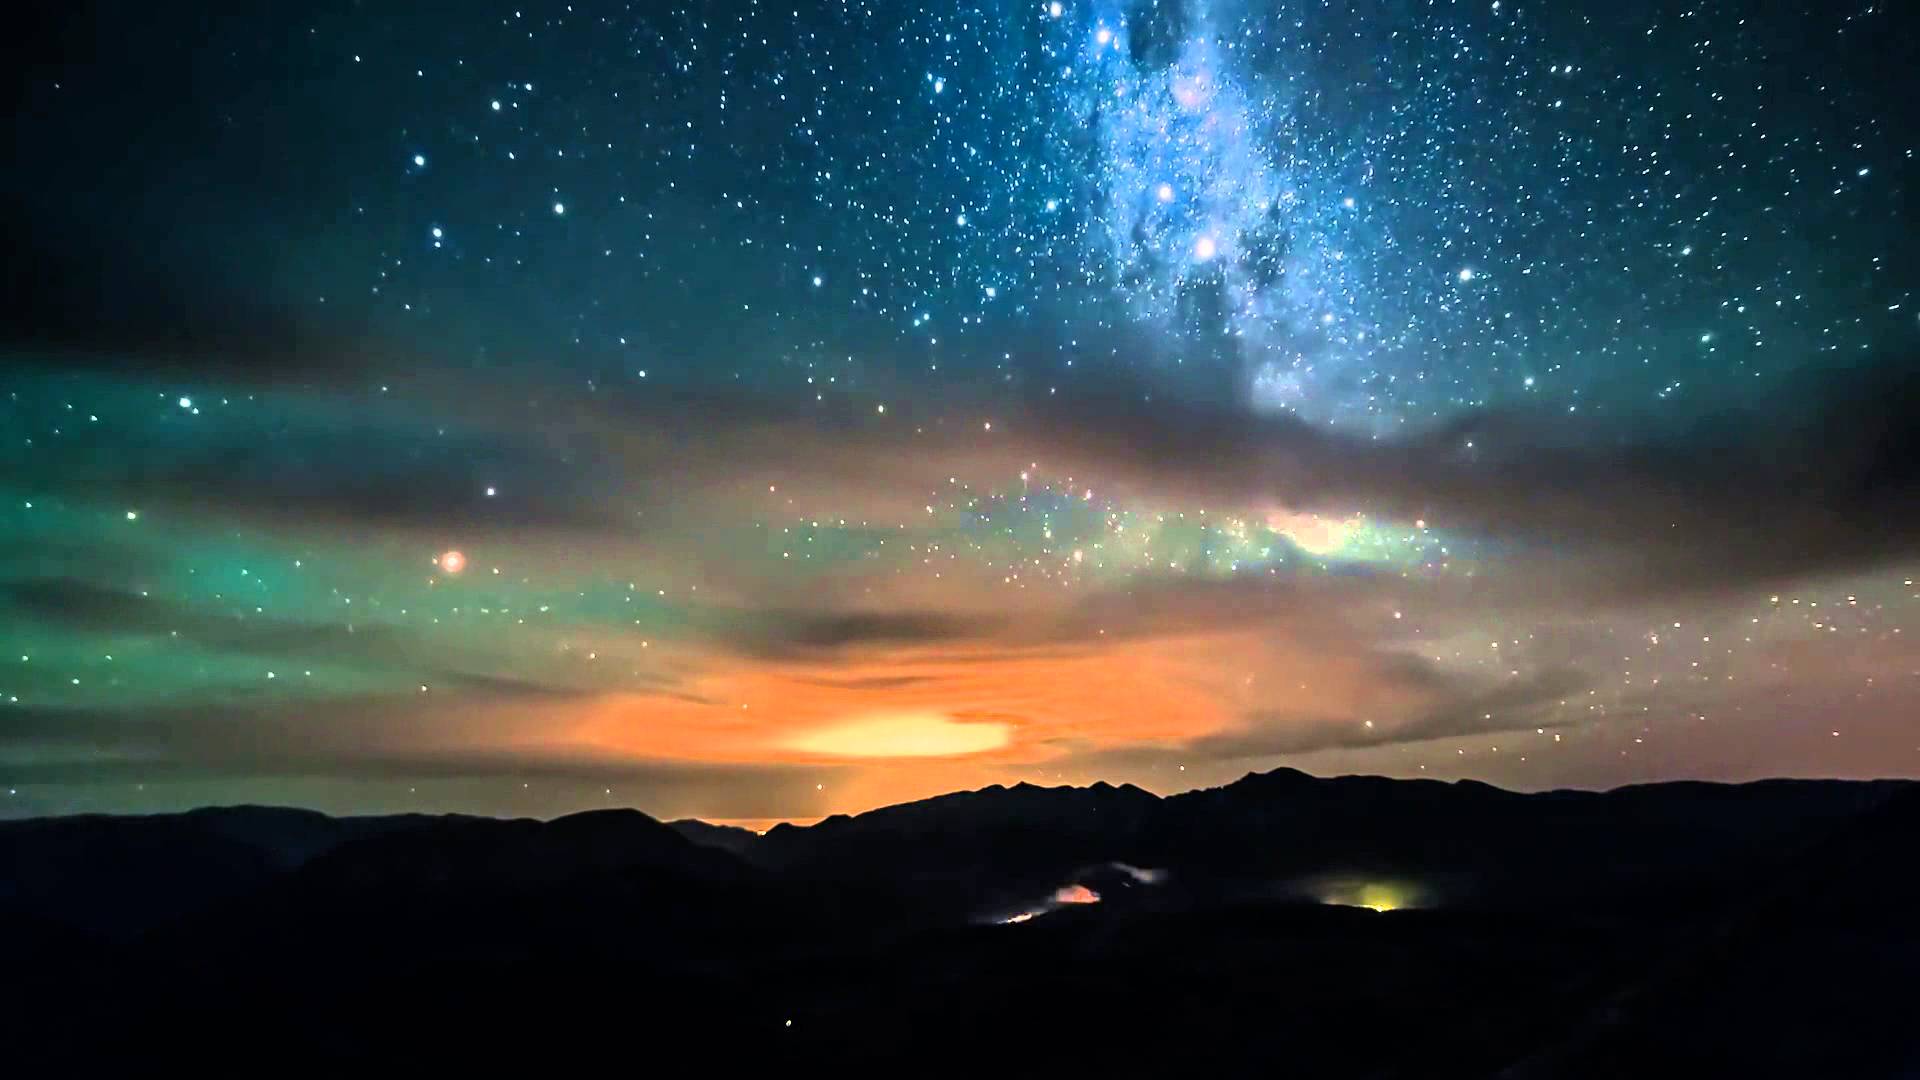 Night Light - Video Background HD 1080p - YouTube